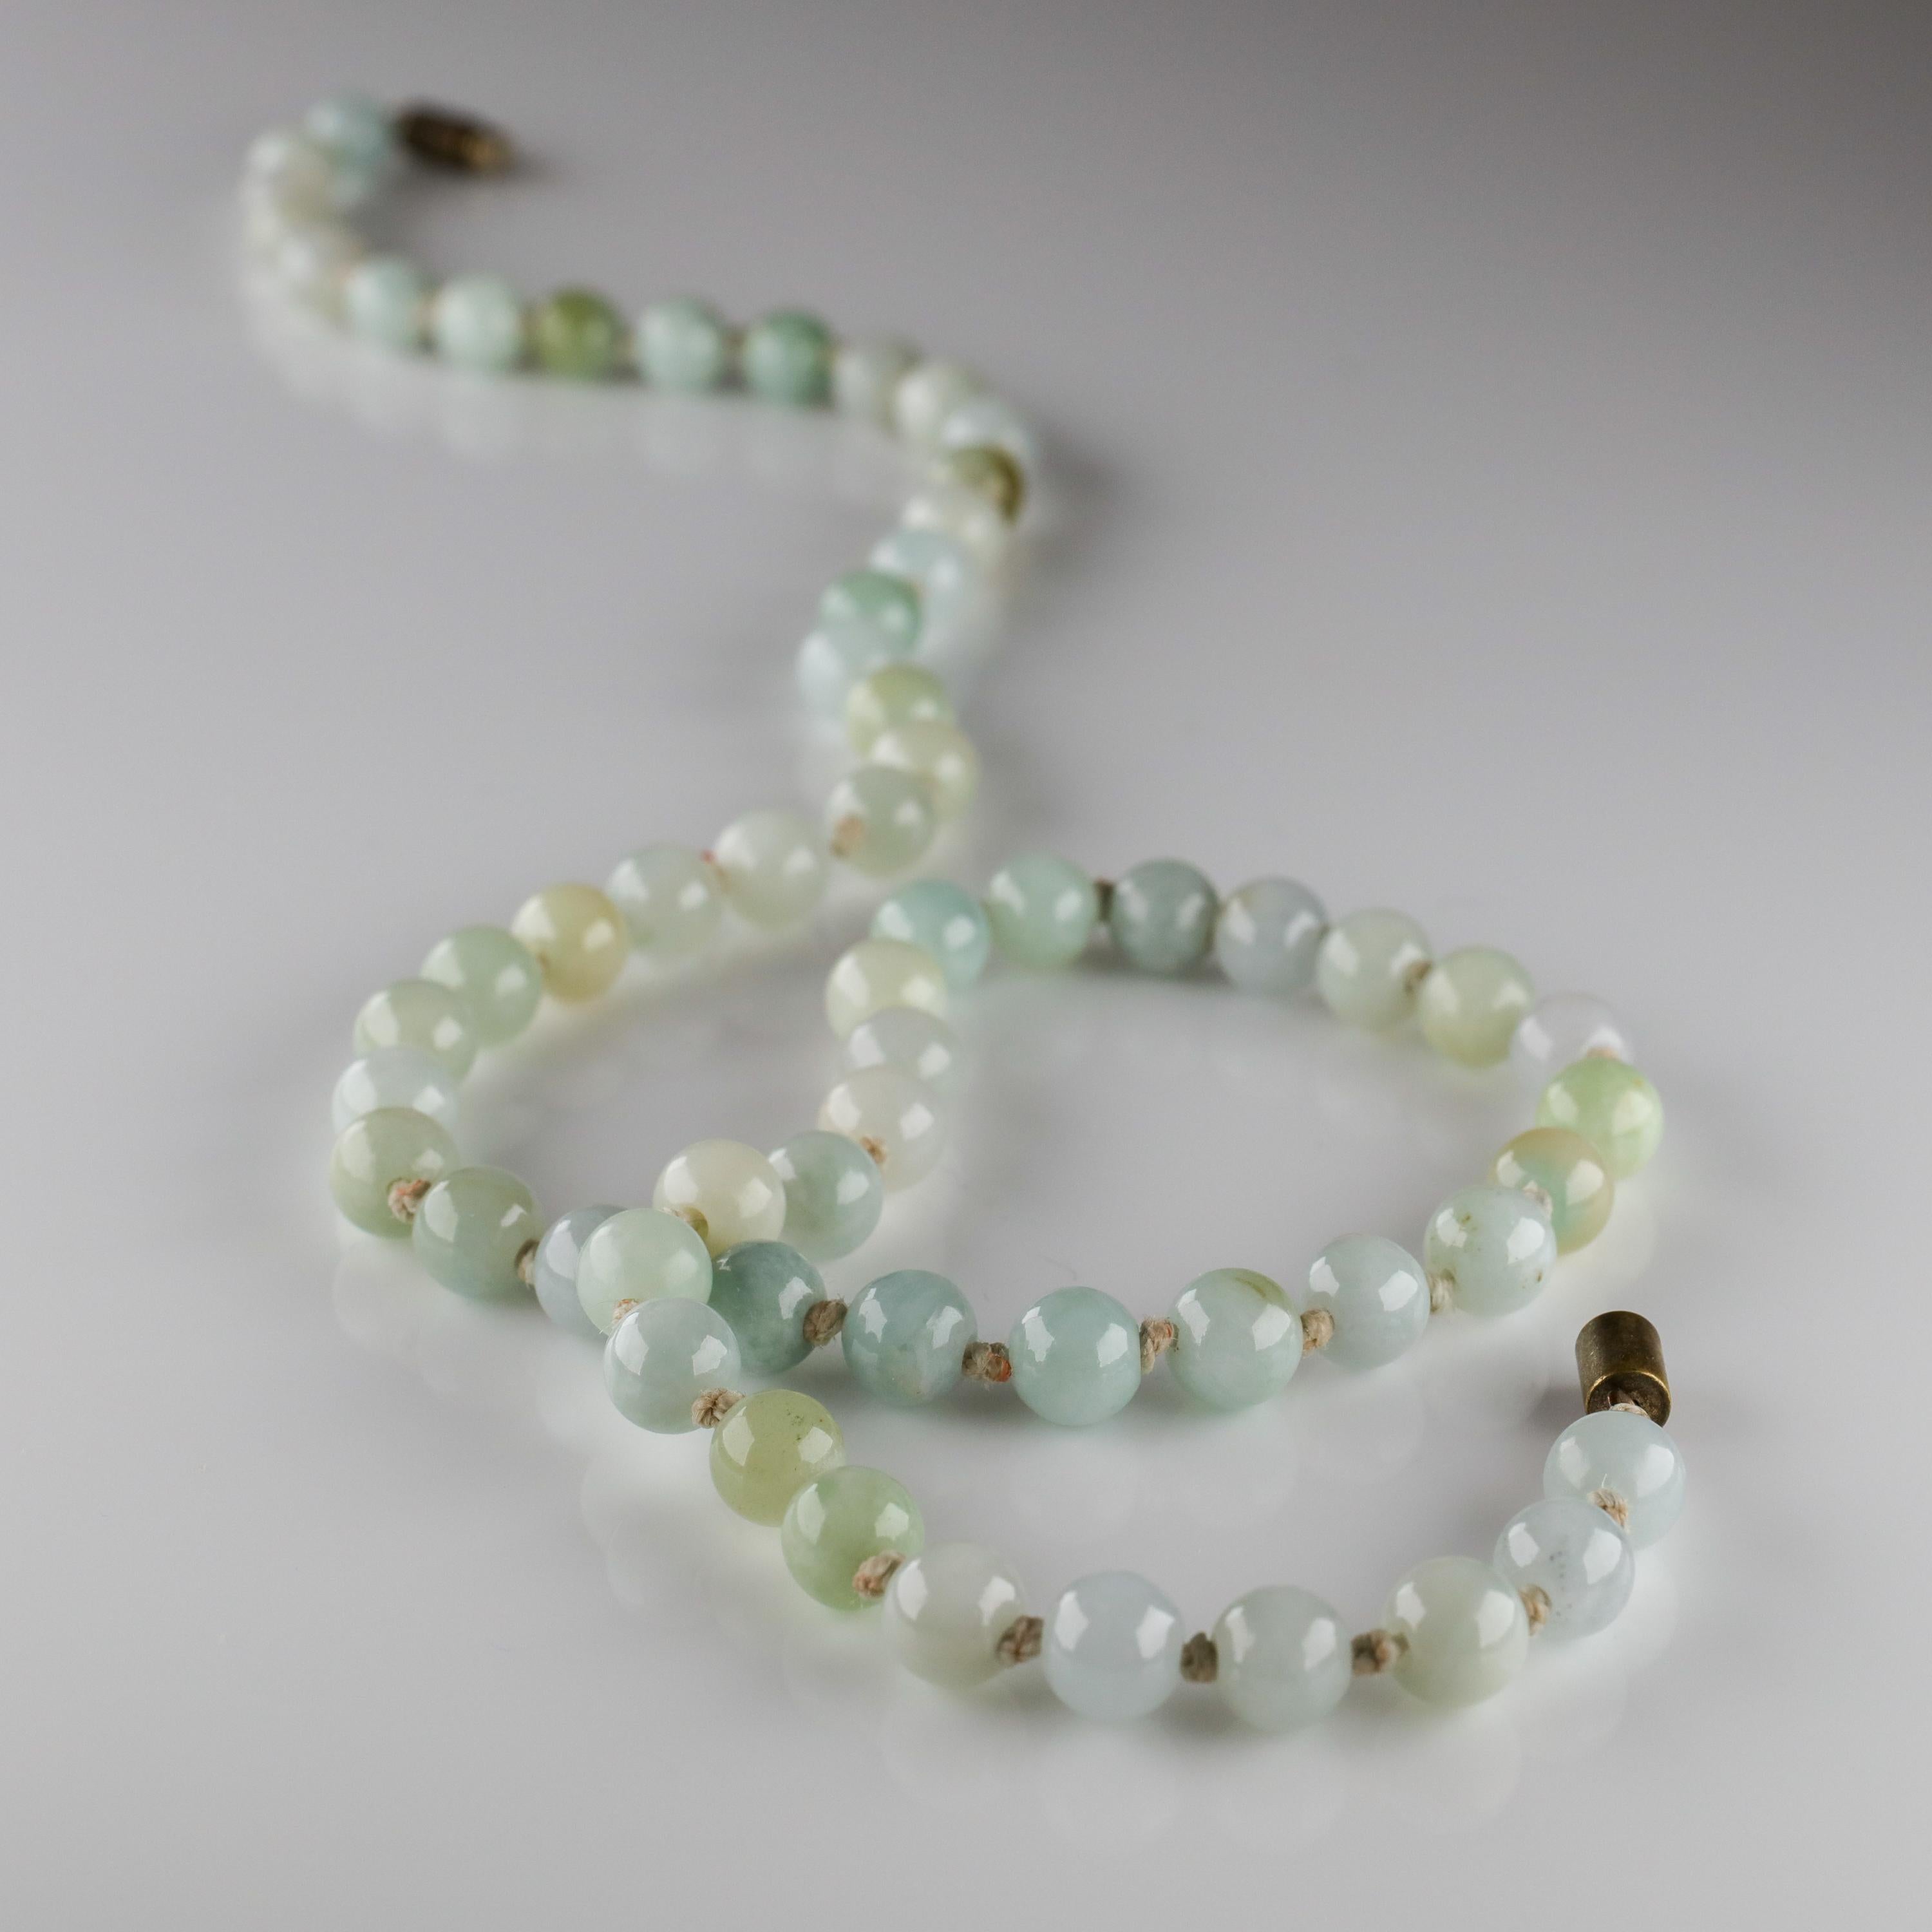 Antique Jade Necklace in Faint, Breathtaking Colors 1